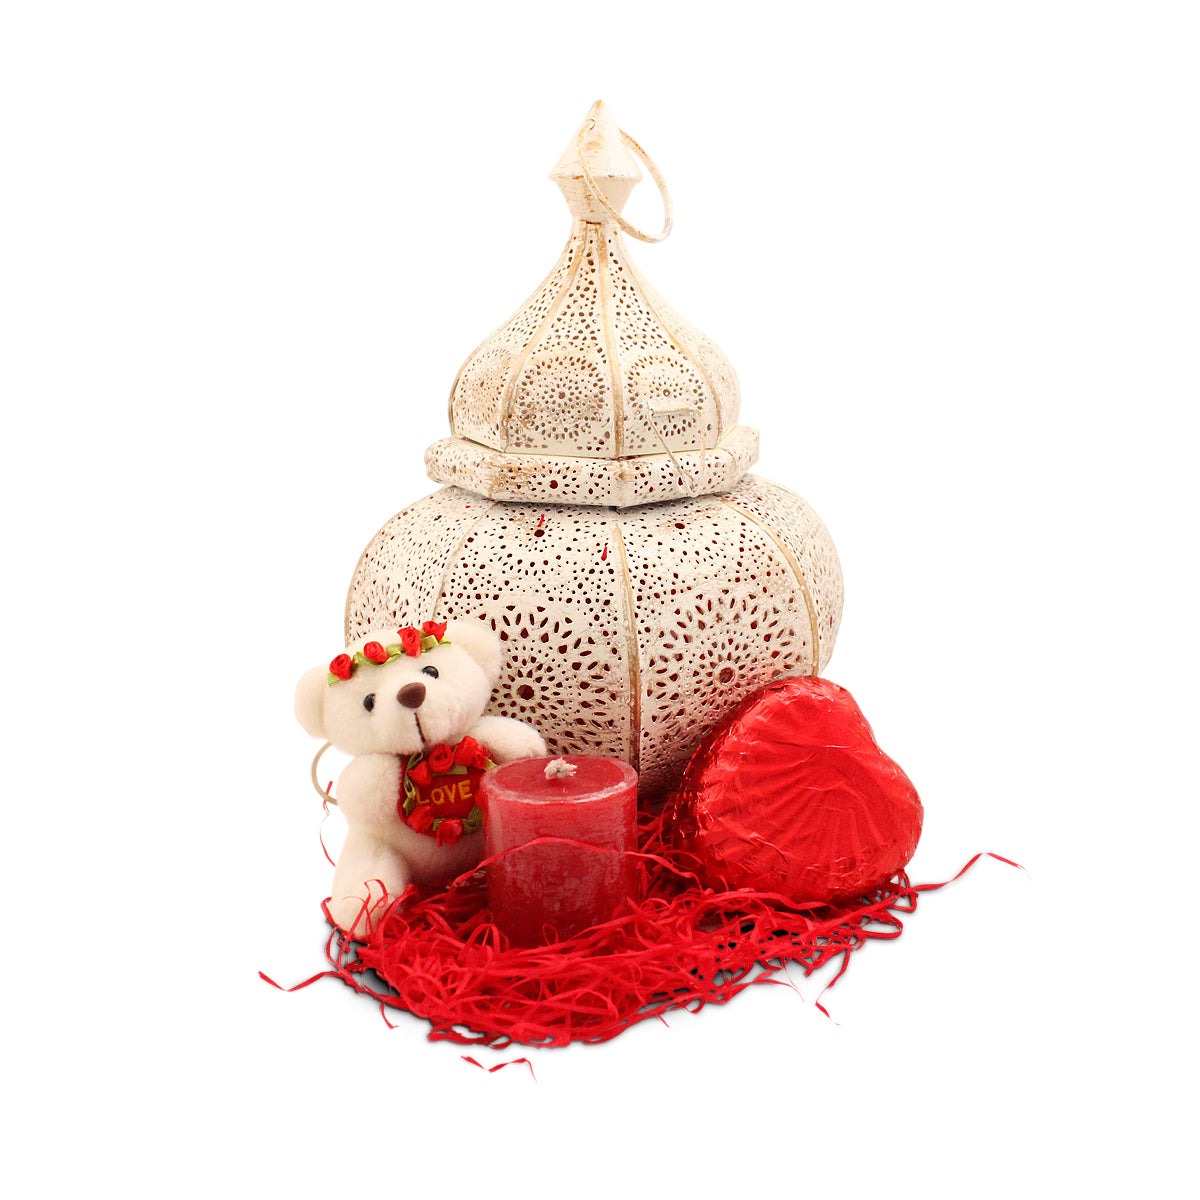 ZOROY Lantern of Eternal Love for your Valentine